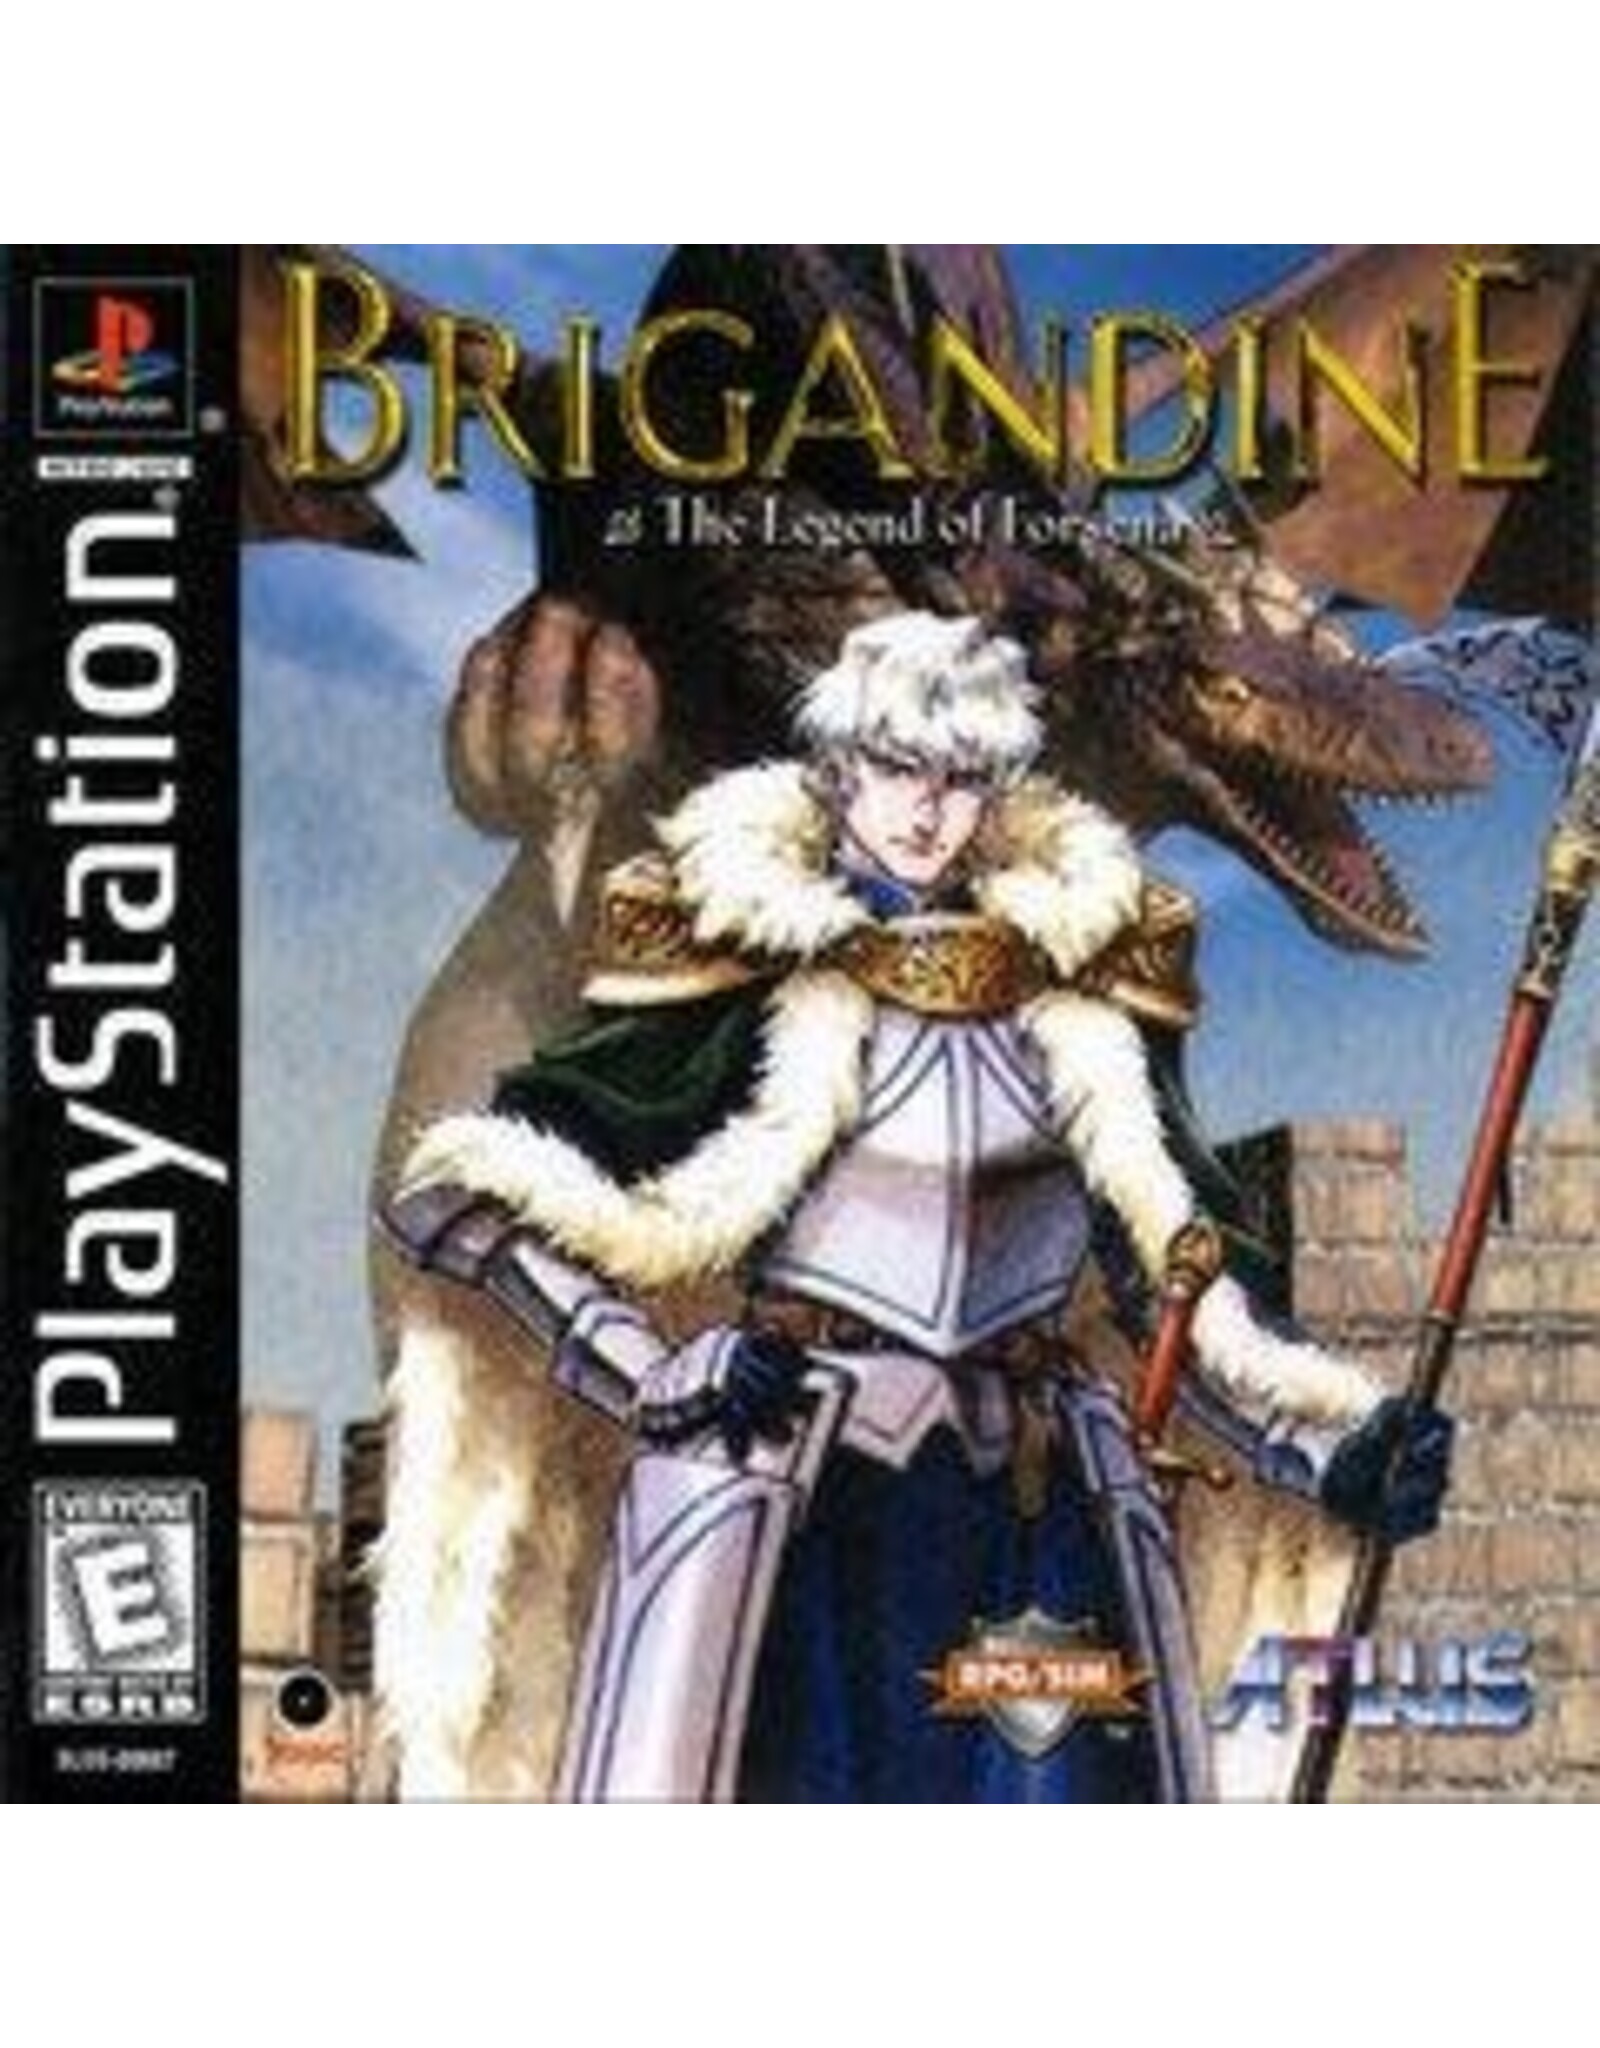 Playstation Brigandine The Legend of Forsena (No Manual)